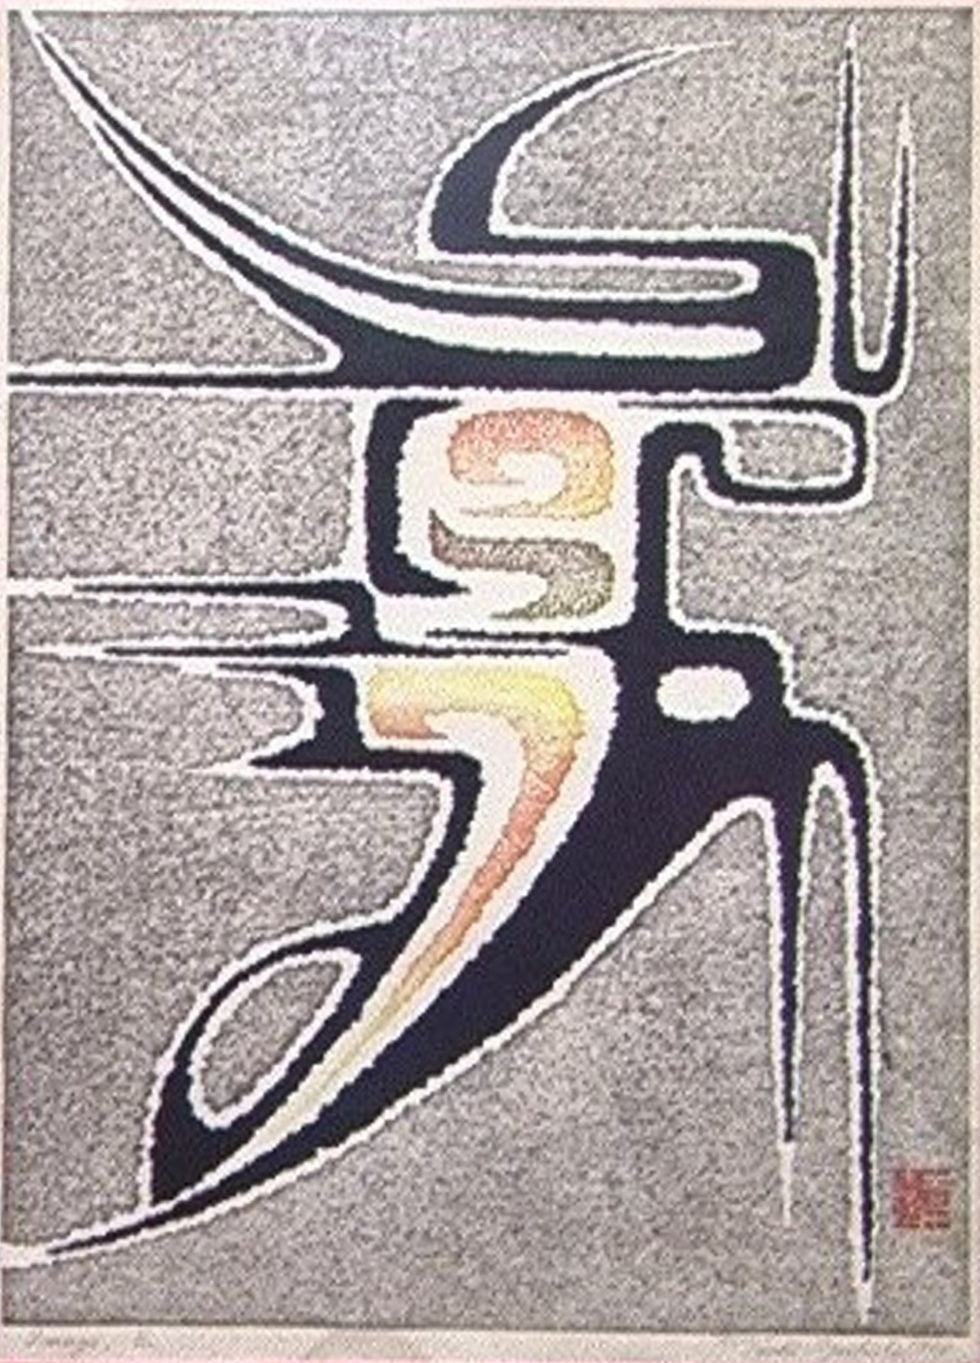 Toshi Yoshida “Image, E” 1958 woodblock print